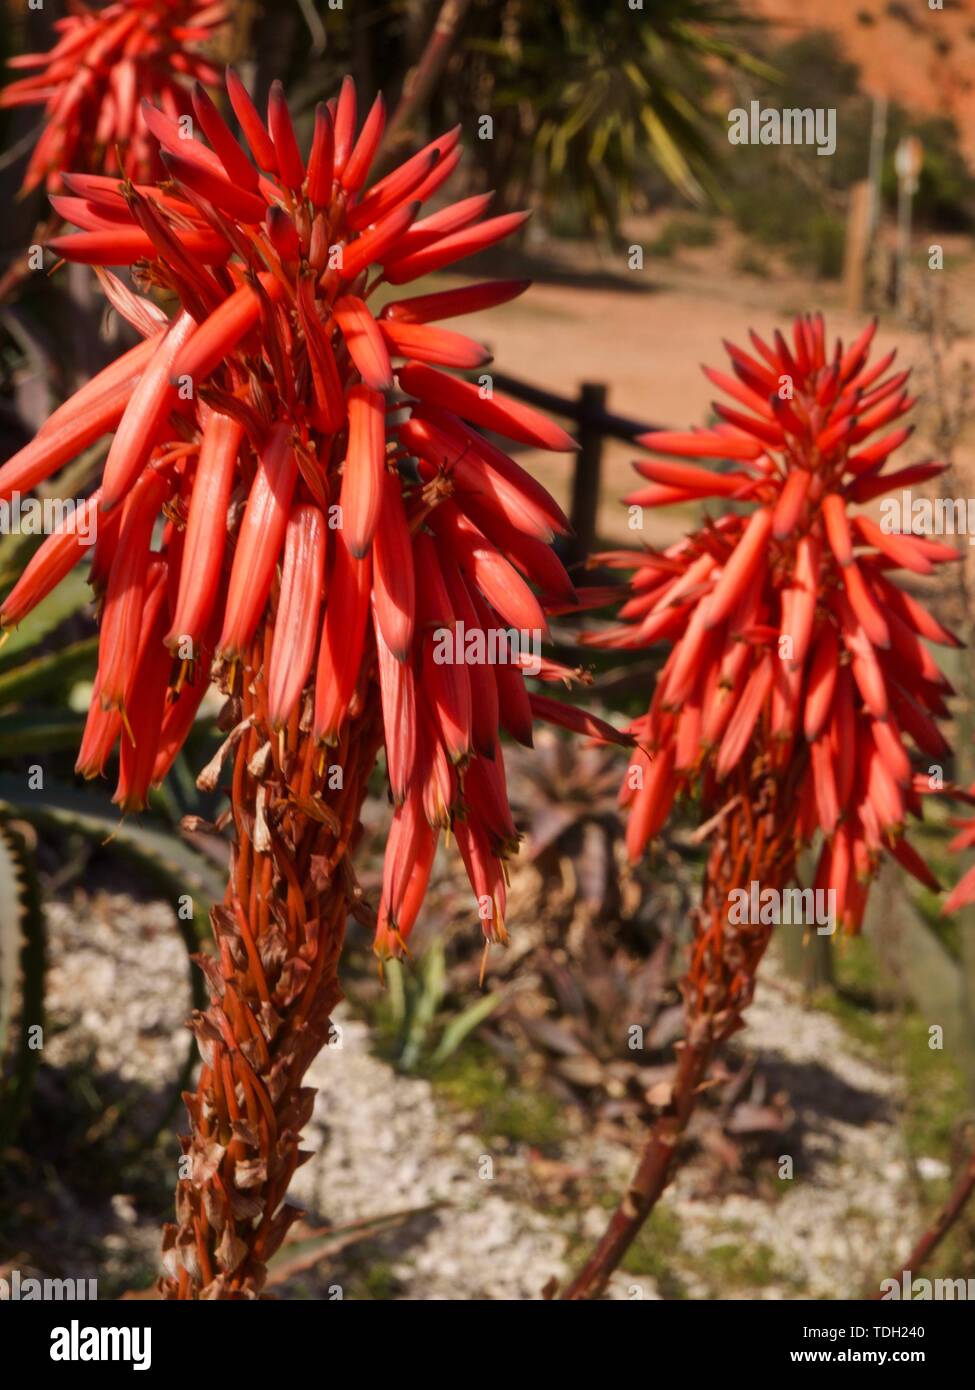 Makro einer Agave cactus Blume in Rot Stockfoto